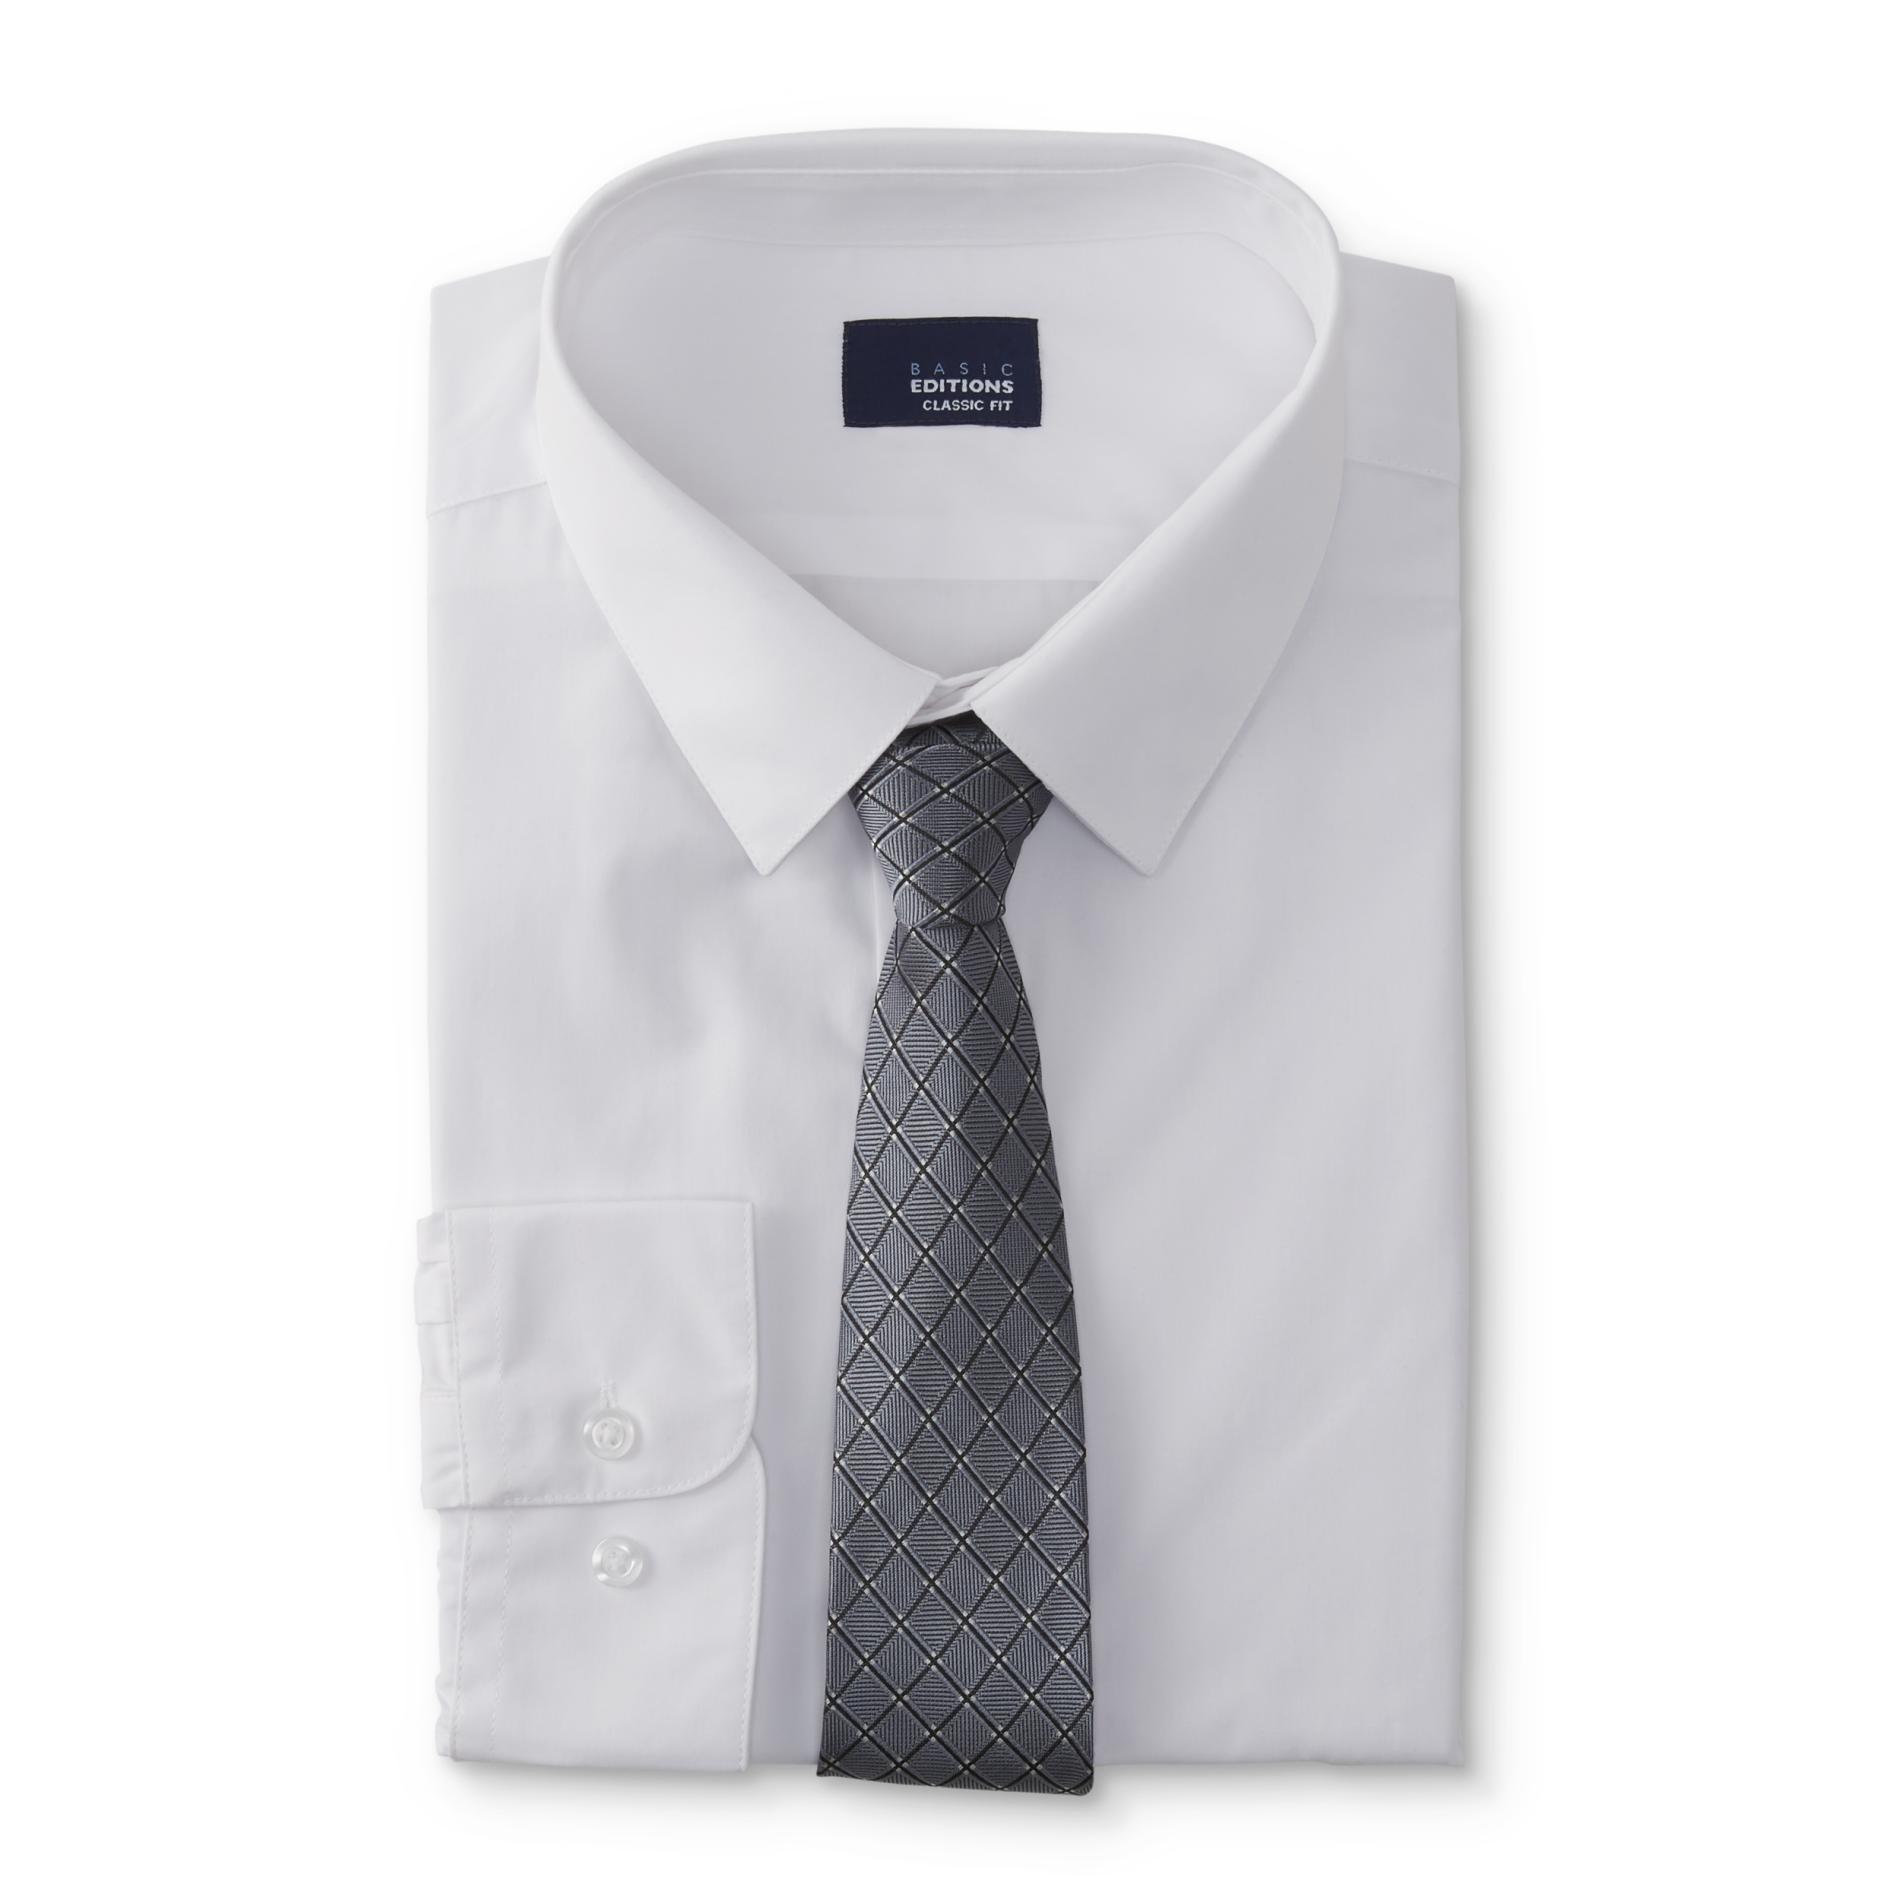 Basic Editions Men's Dress Shirt & Necktie - Diamond